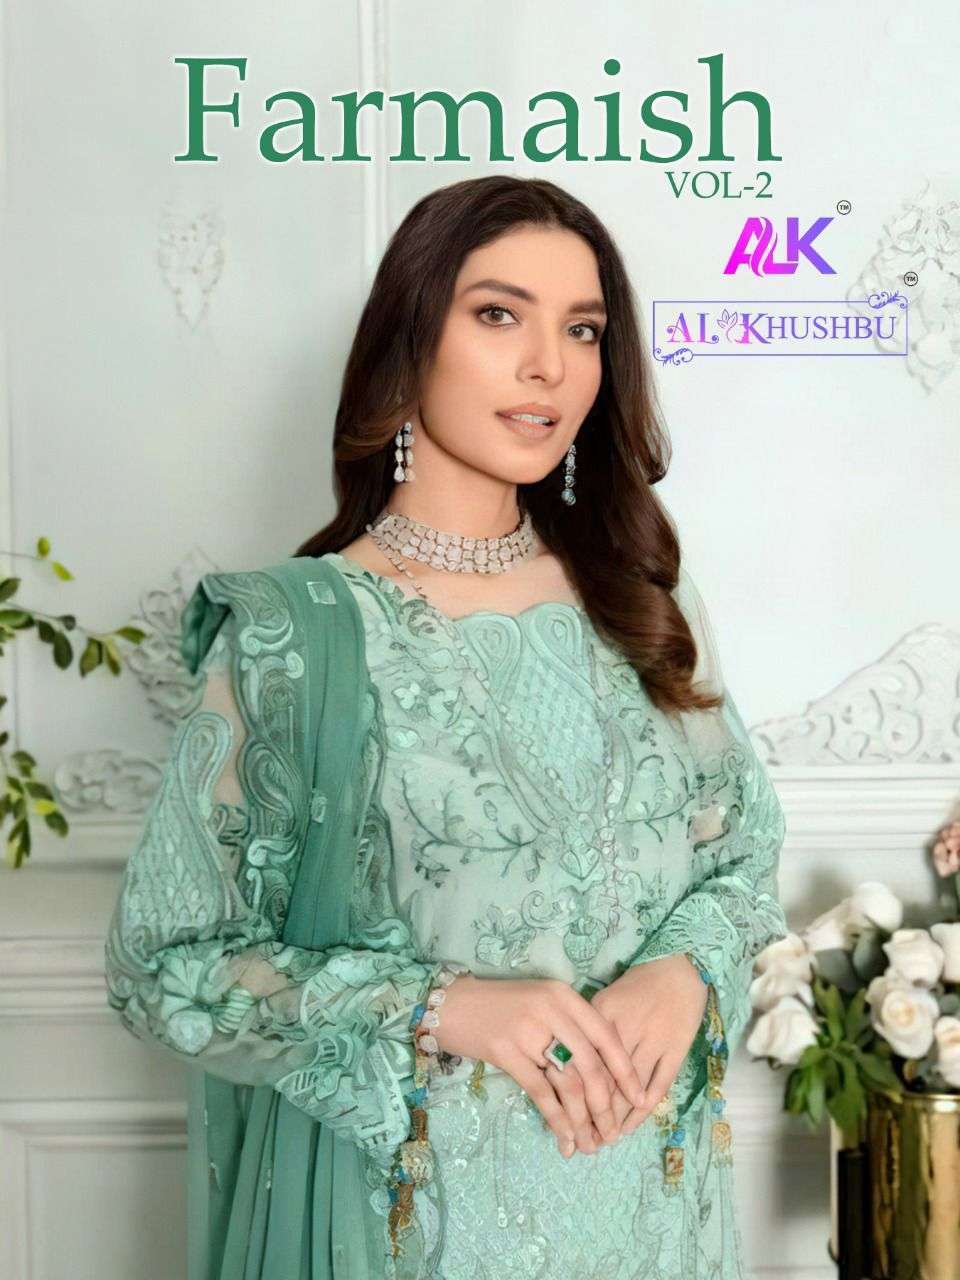 Farmaish Vol 2 By Al Khushbu Fancy Look Designer Pakistani Suits Manufacturer IN Surat - SaiDharaNx 